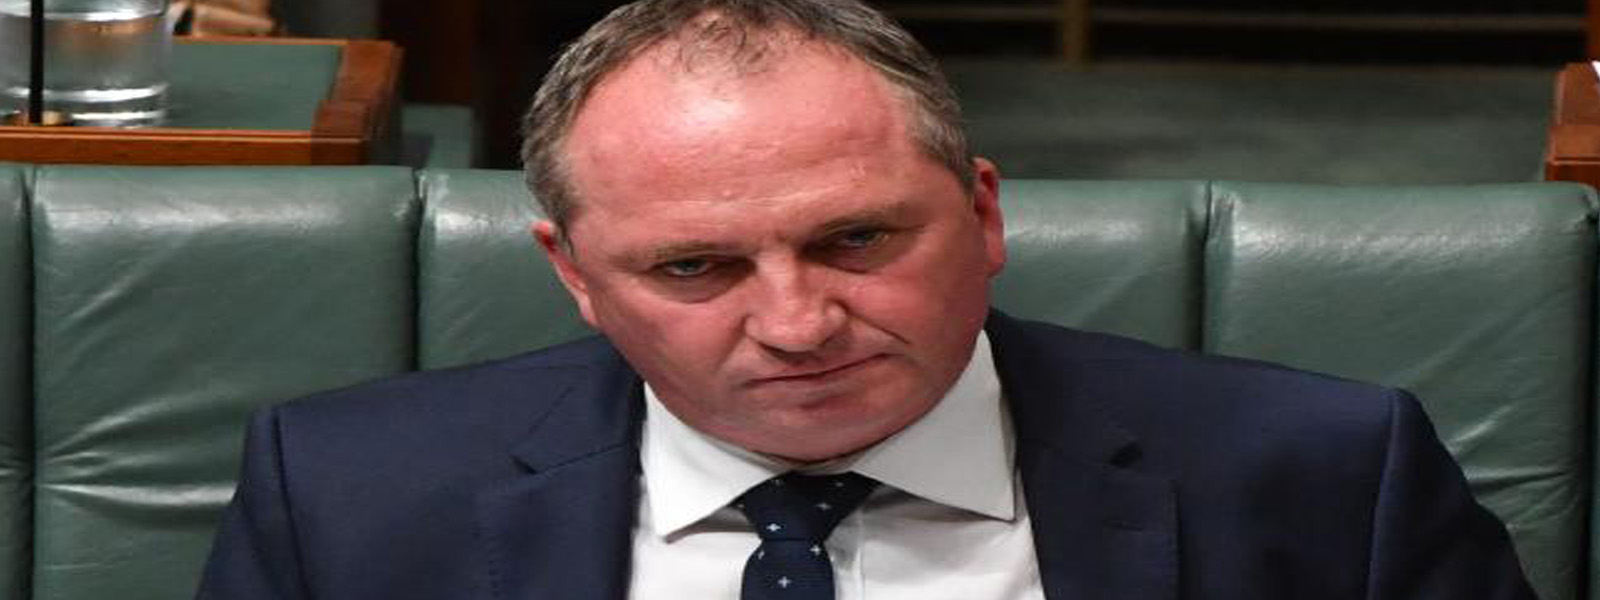 Scandal-hit Australia deputy PM to resign